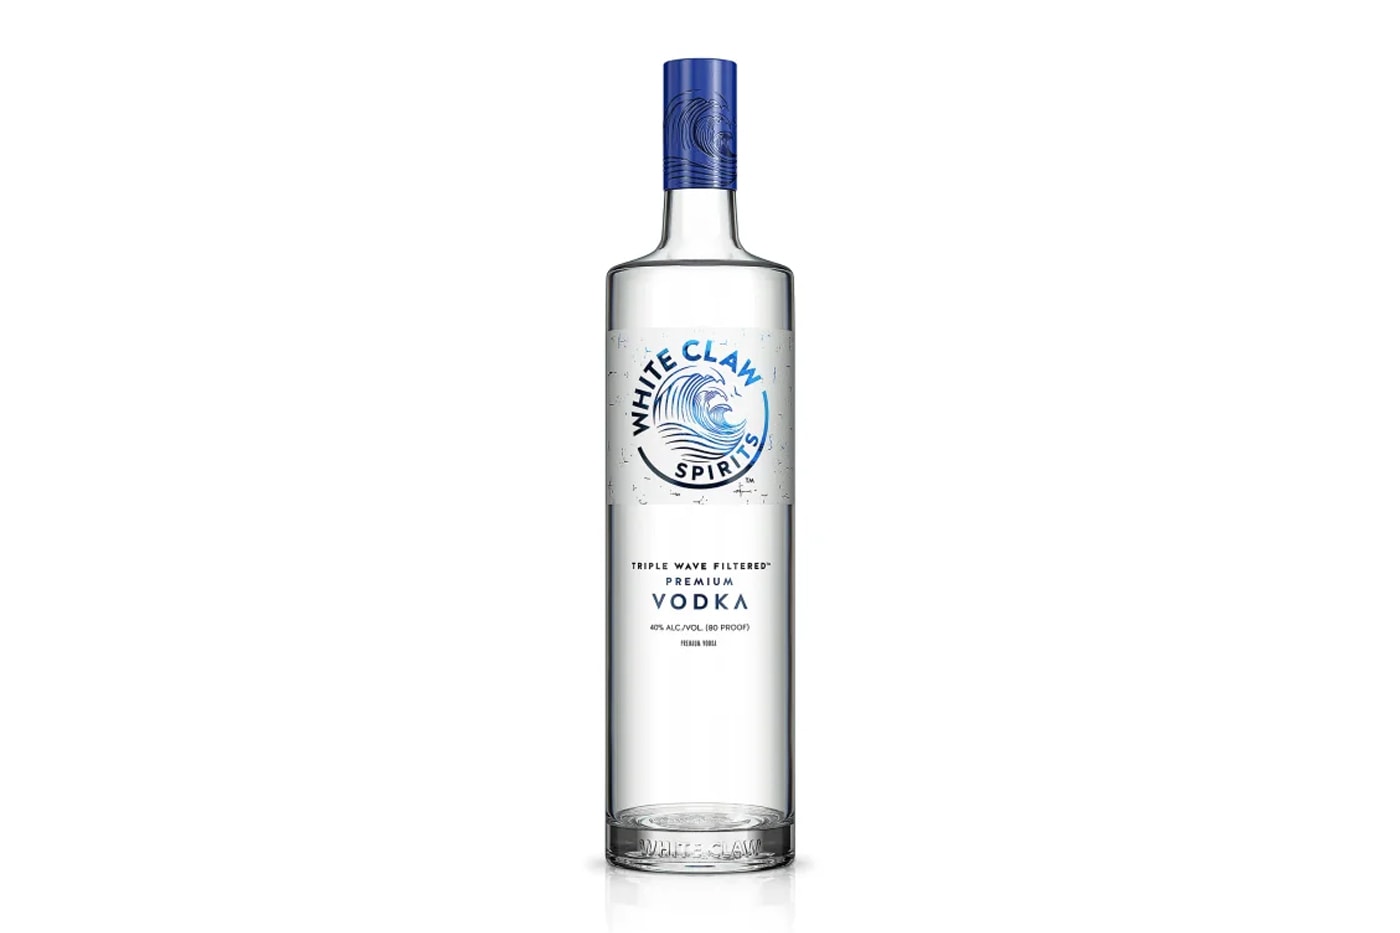 White Claw Premium Vodka Vodka + Soda Launch Info Taste Review Triple Wave Filtered